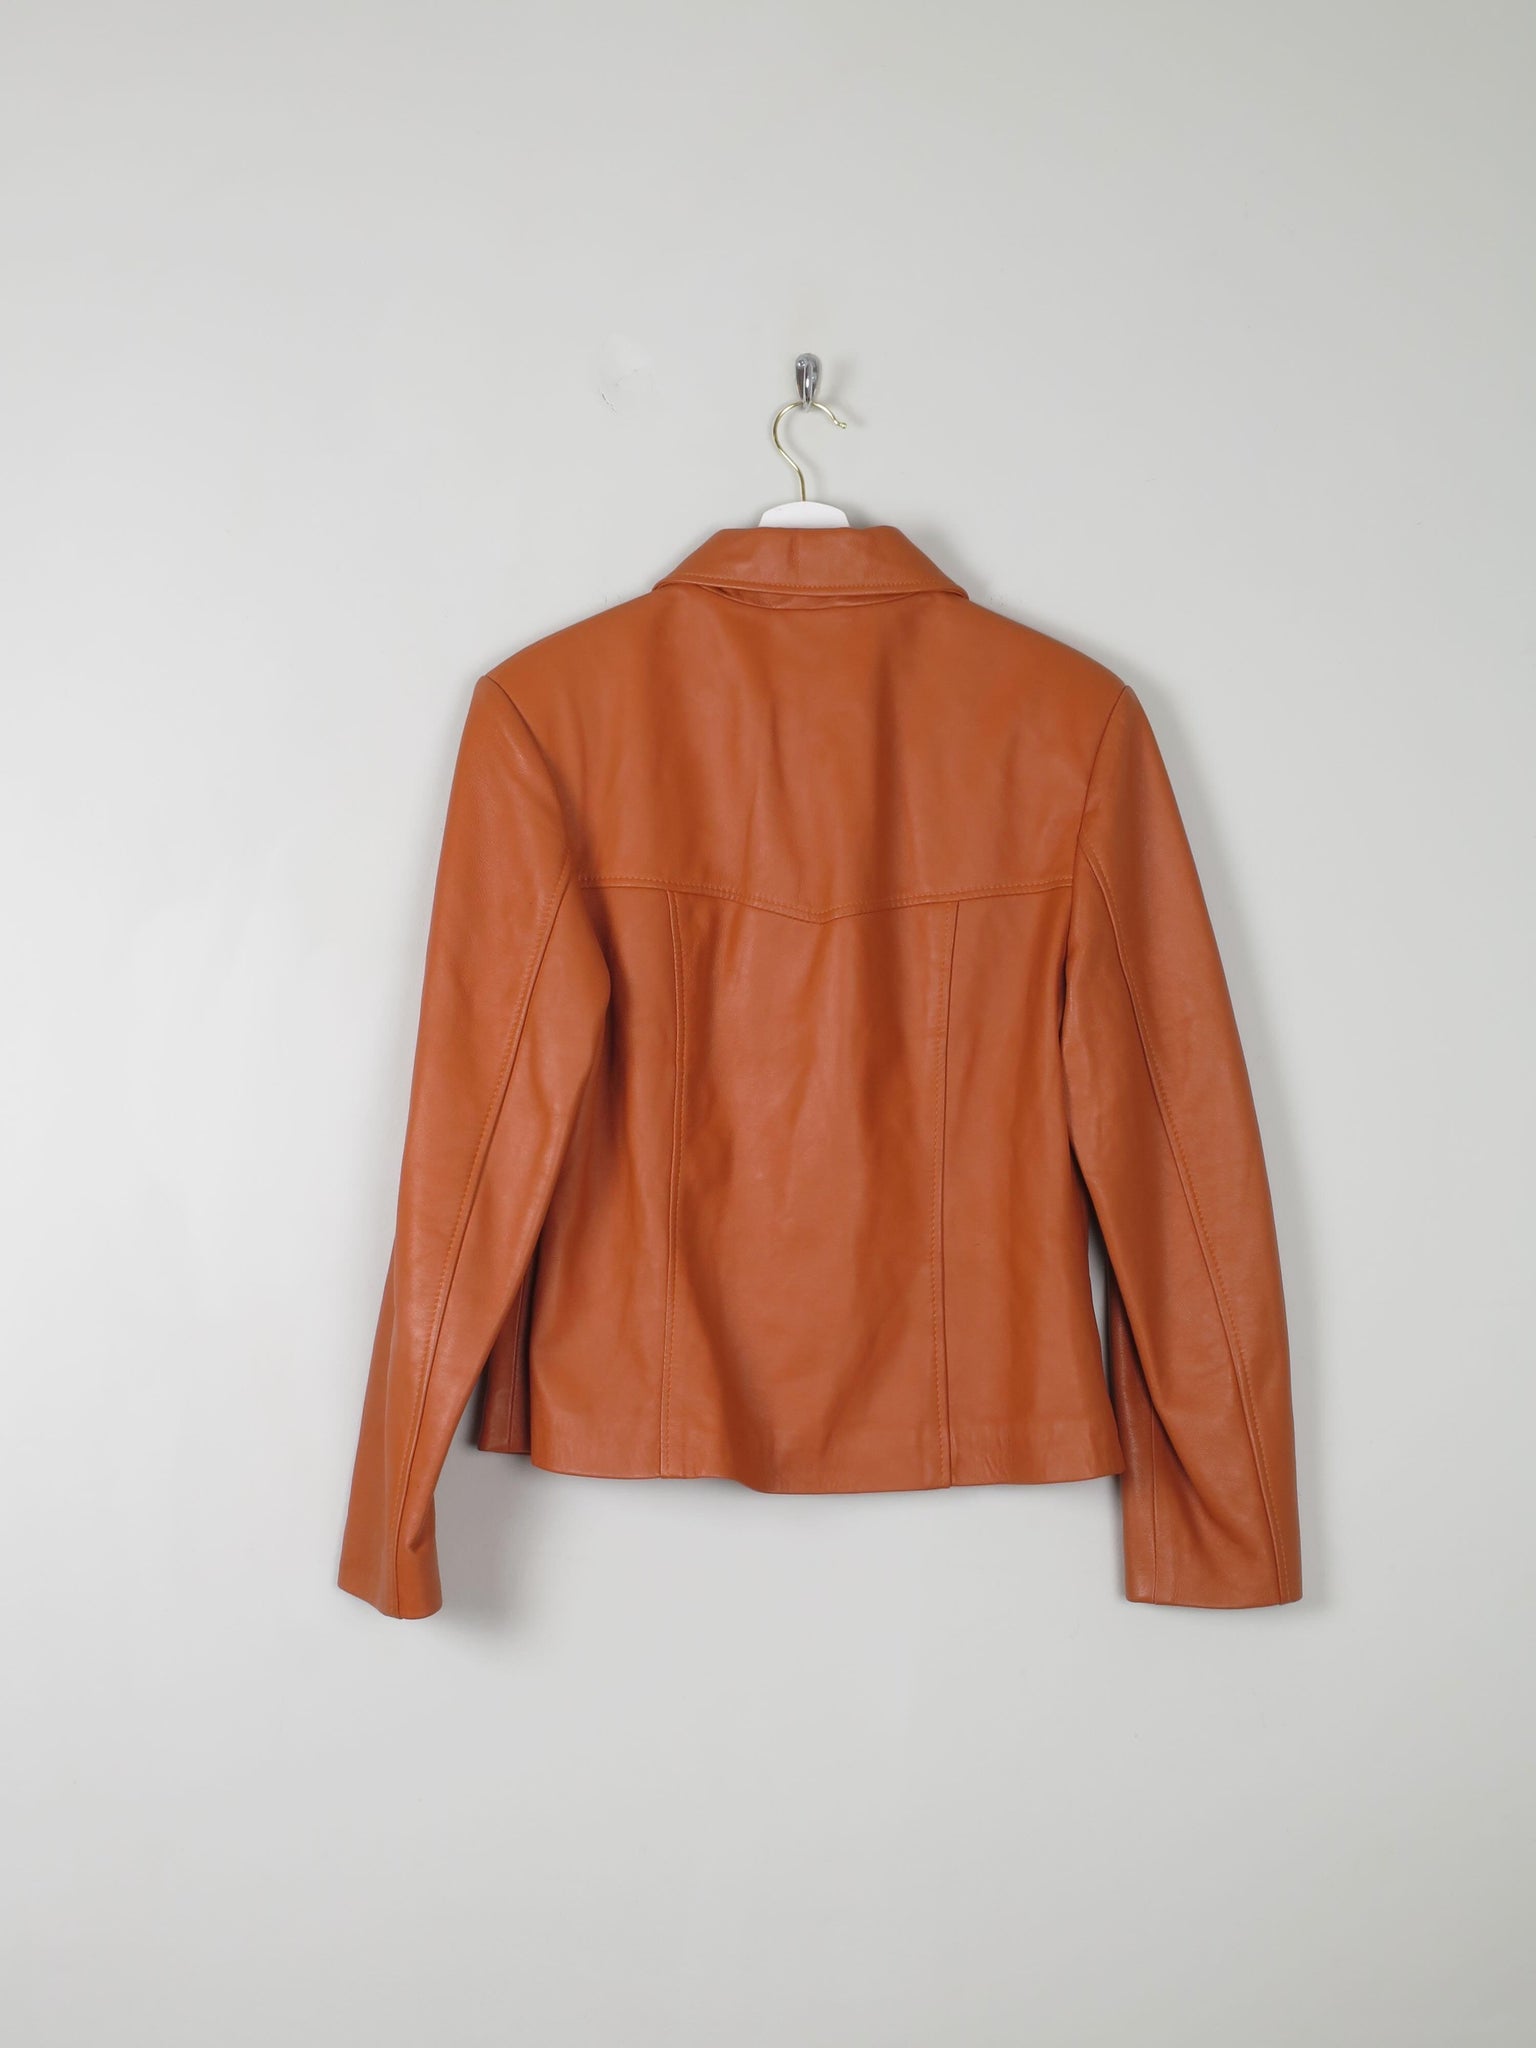 Women's Orange/Tan Leather Vintage Jacket M - The Harlequin